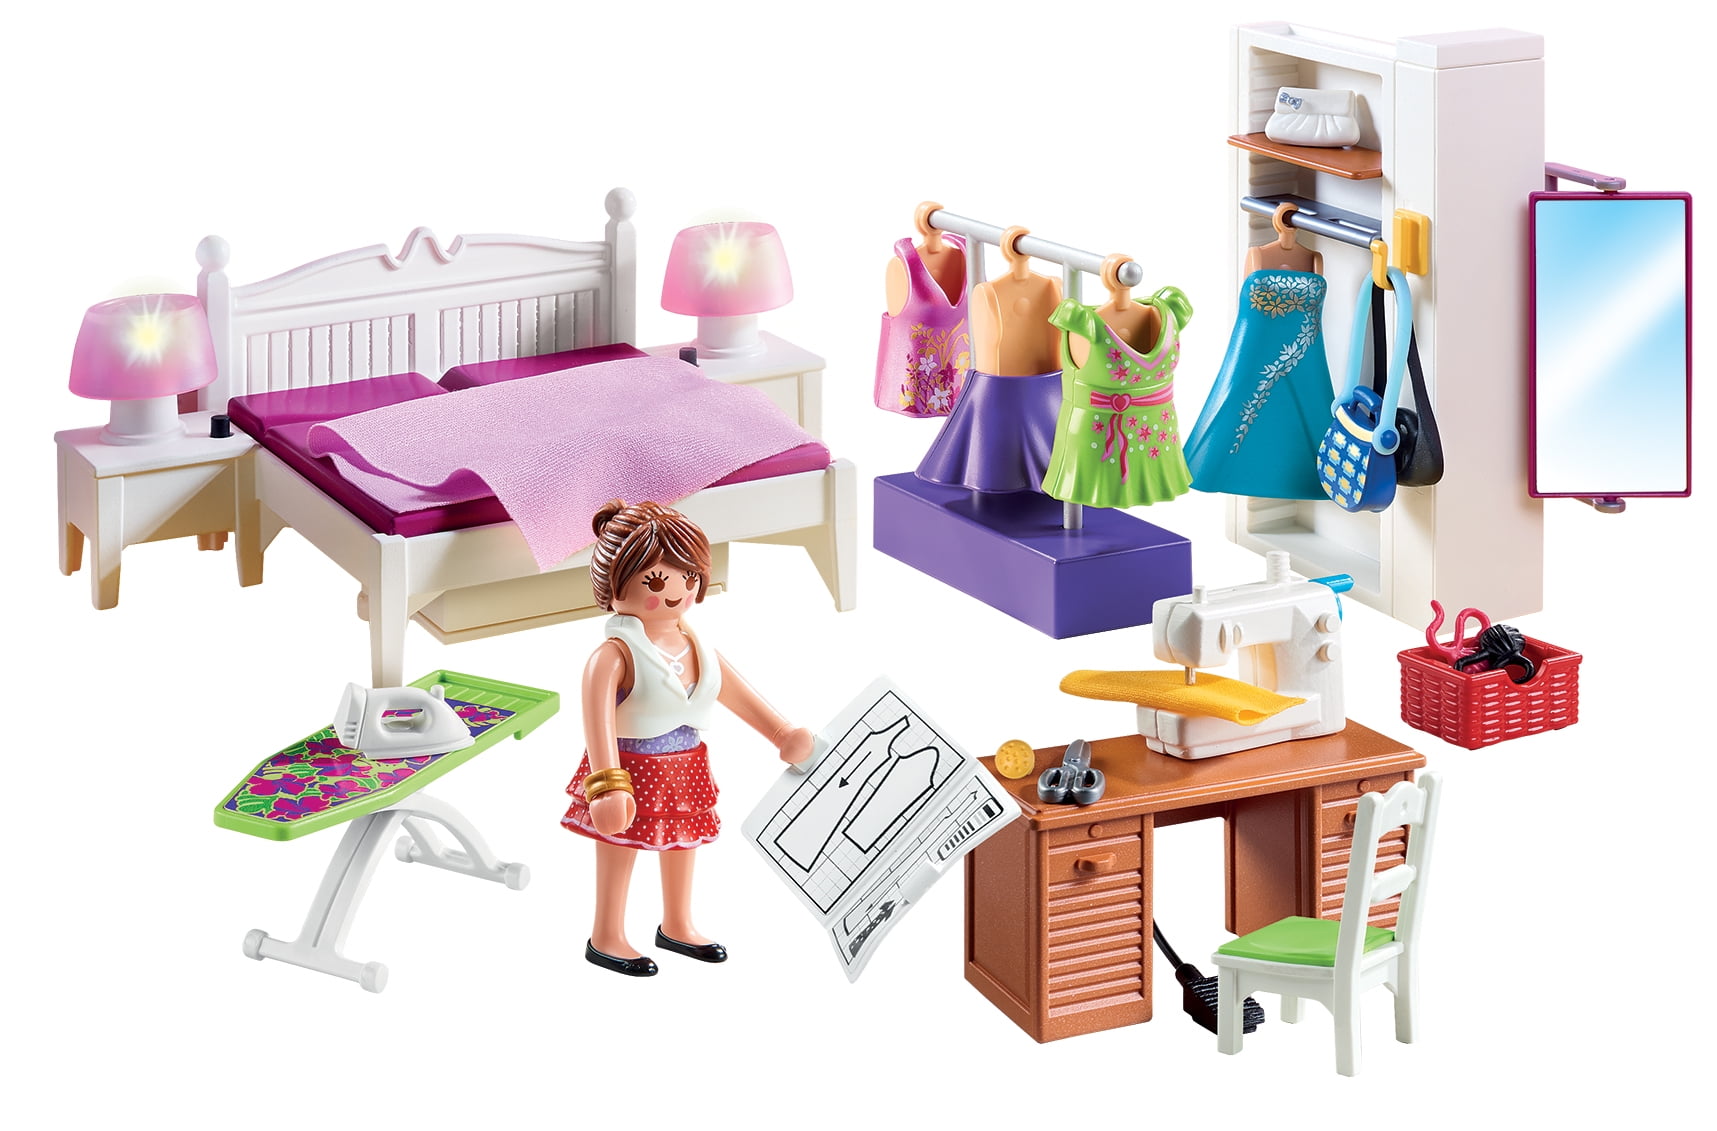 Playmobil Dollshouse furniture Blue bed for boy child figure NEW 